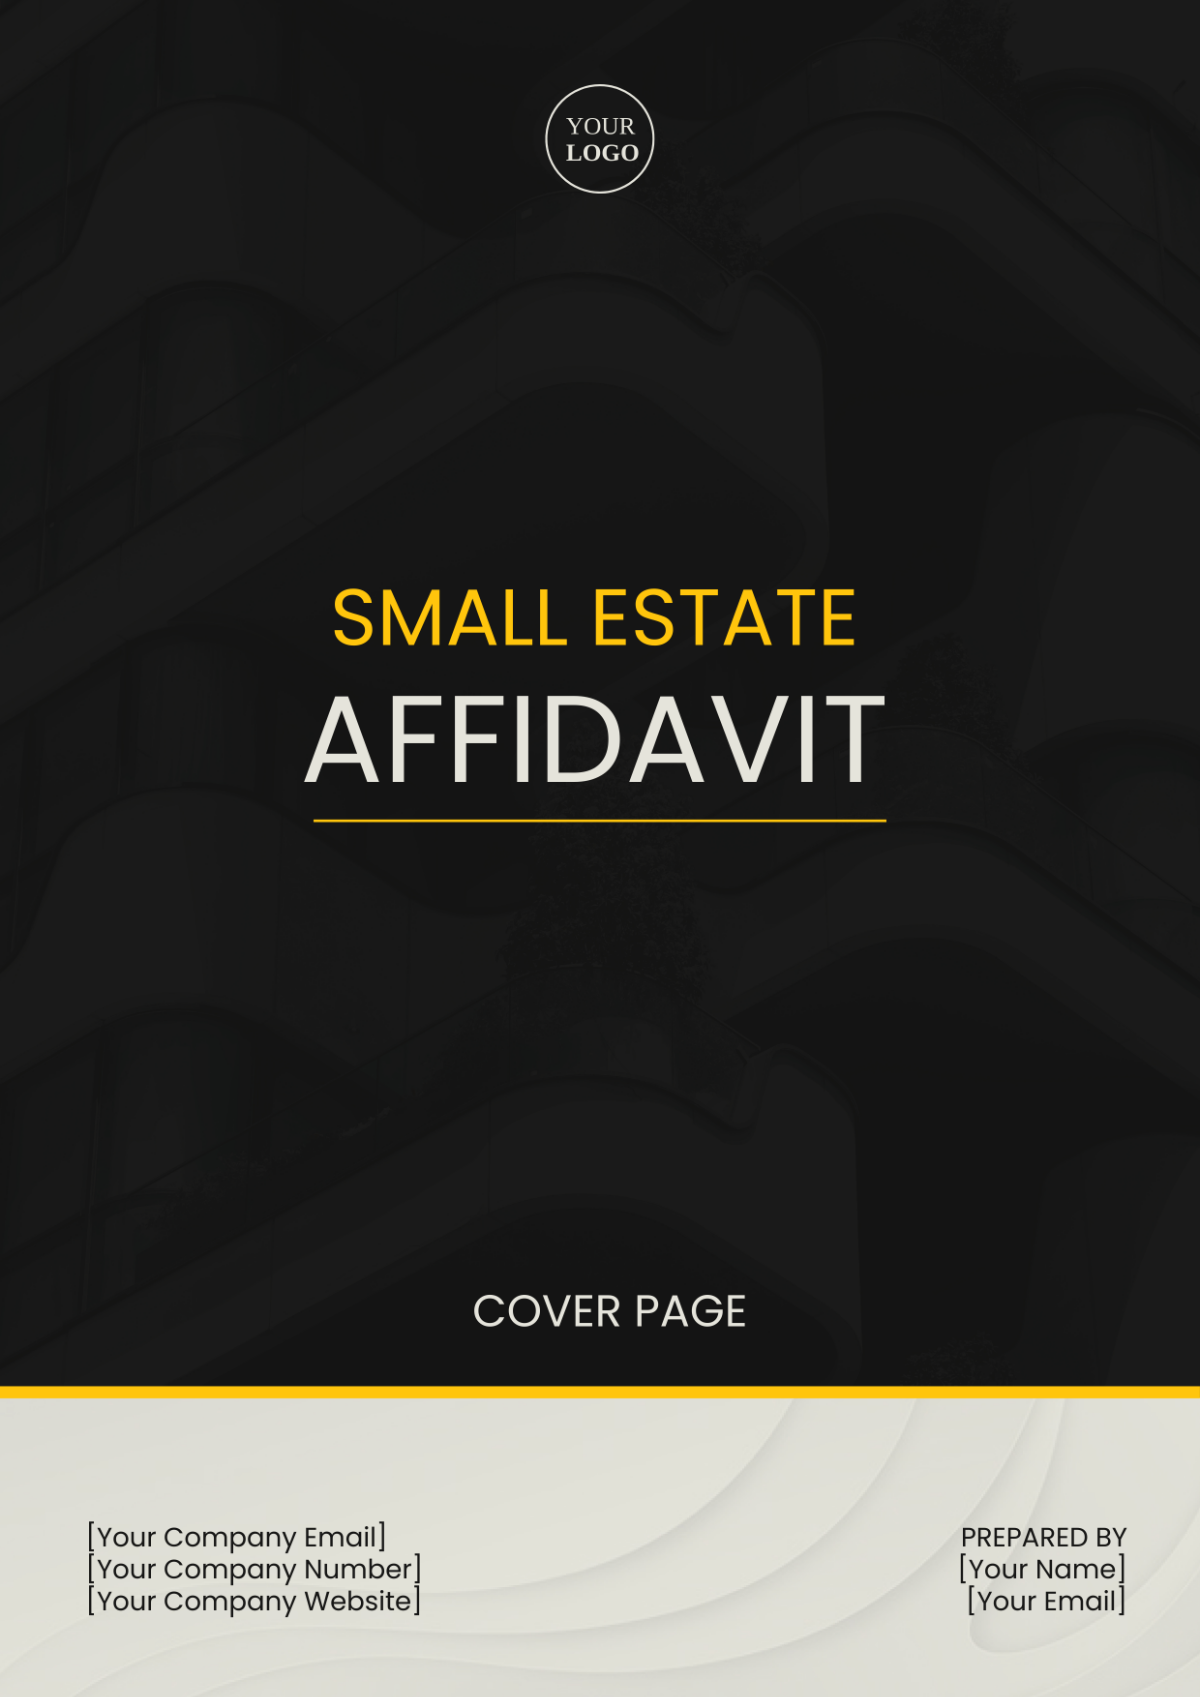 Small Estate Affidavit Cover Page